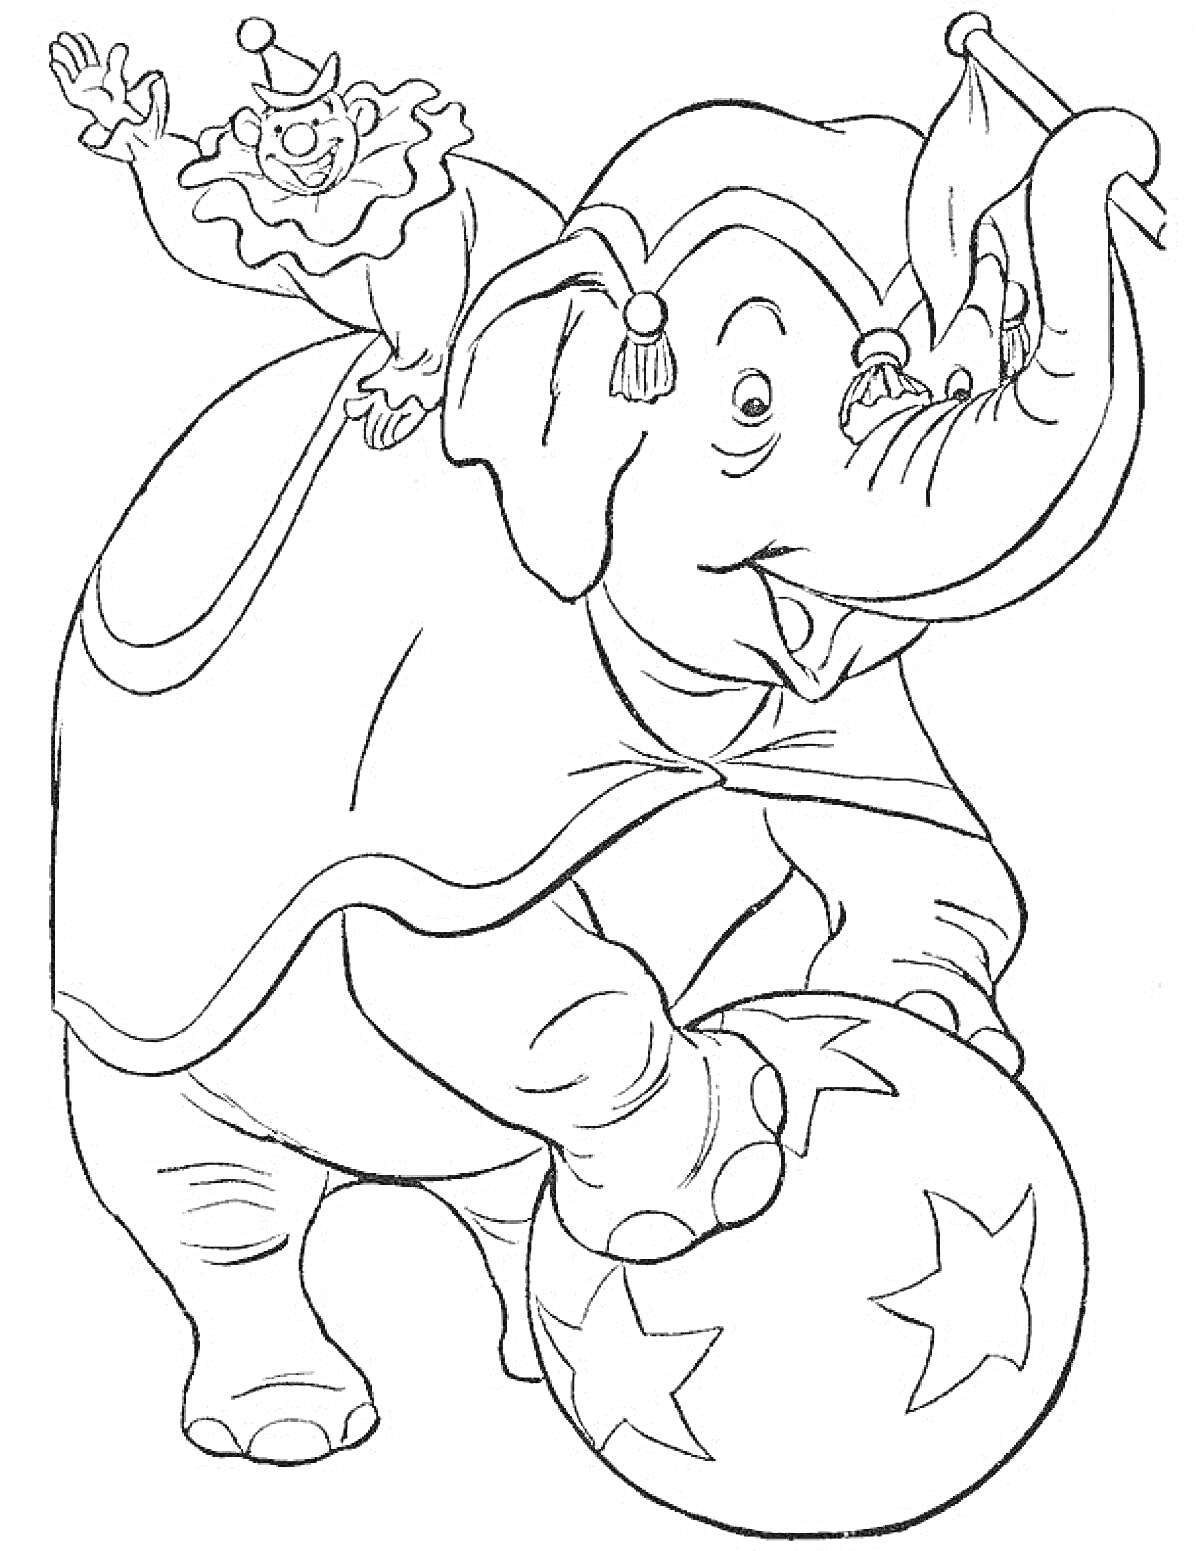 Раскраска Слон жонглирует гигантским мячом с клоуном на спине